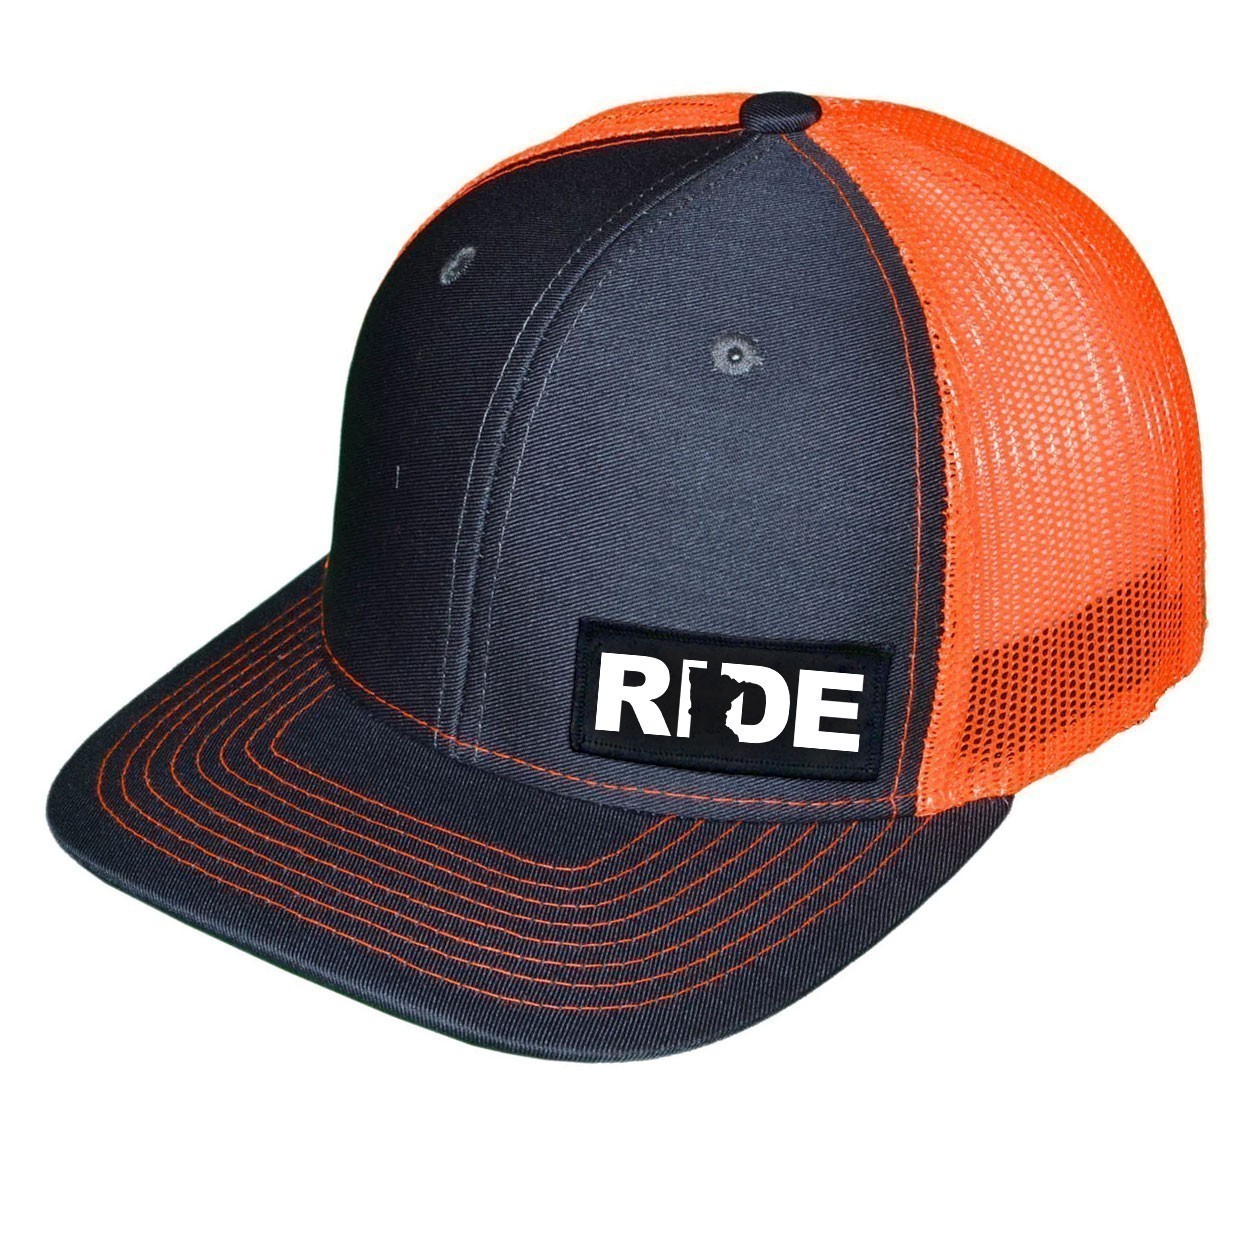 Ride Minnesota Night Out Woven Patch Snapback Trucker Hat Charcoal/Orange (White Logo)